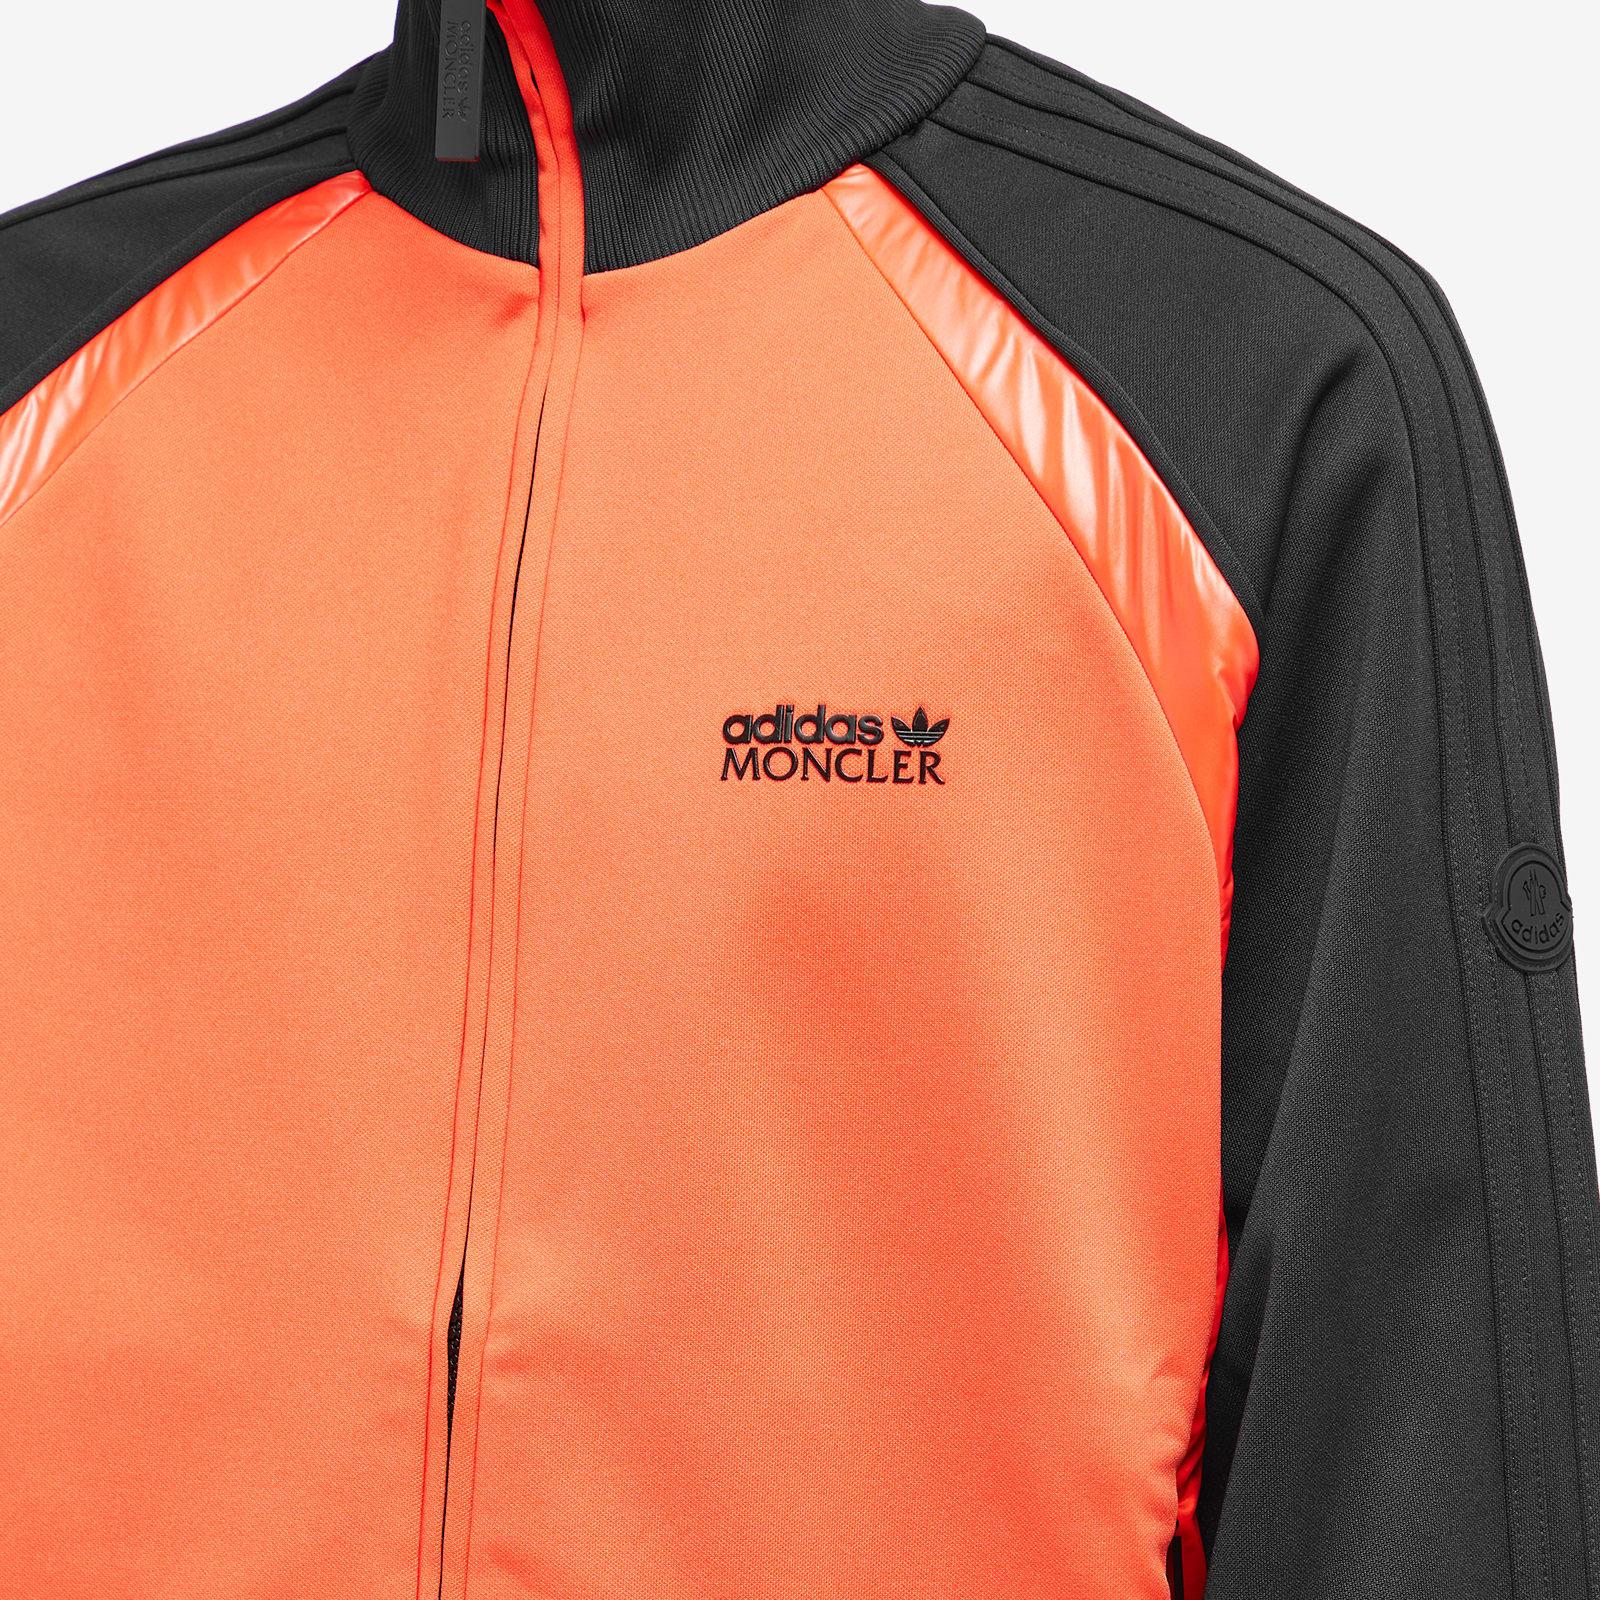 Moncler X Adidas Originals Zip Up Knit Track Jacket in Orange for